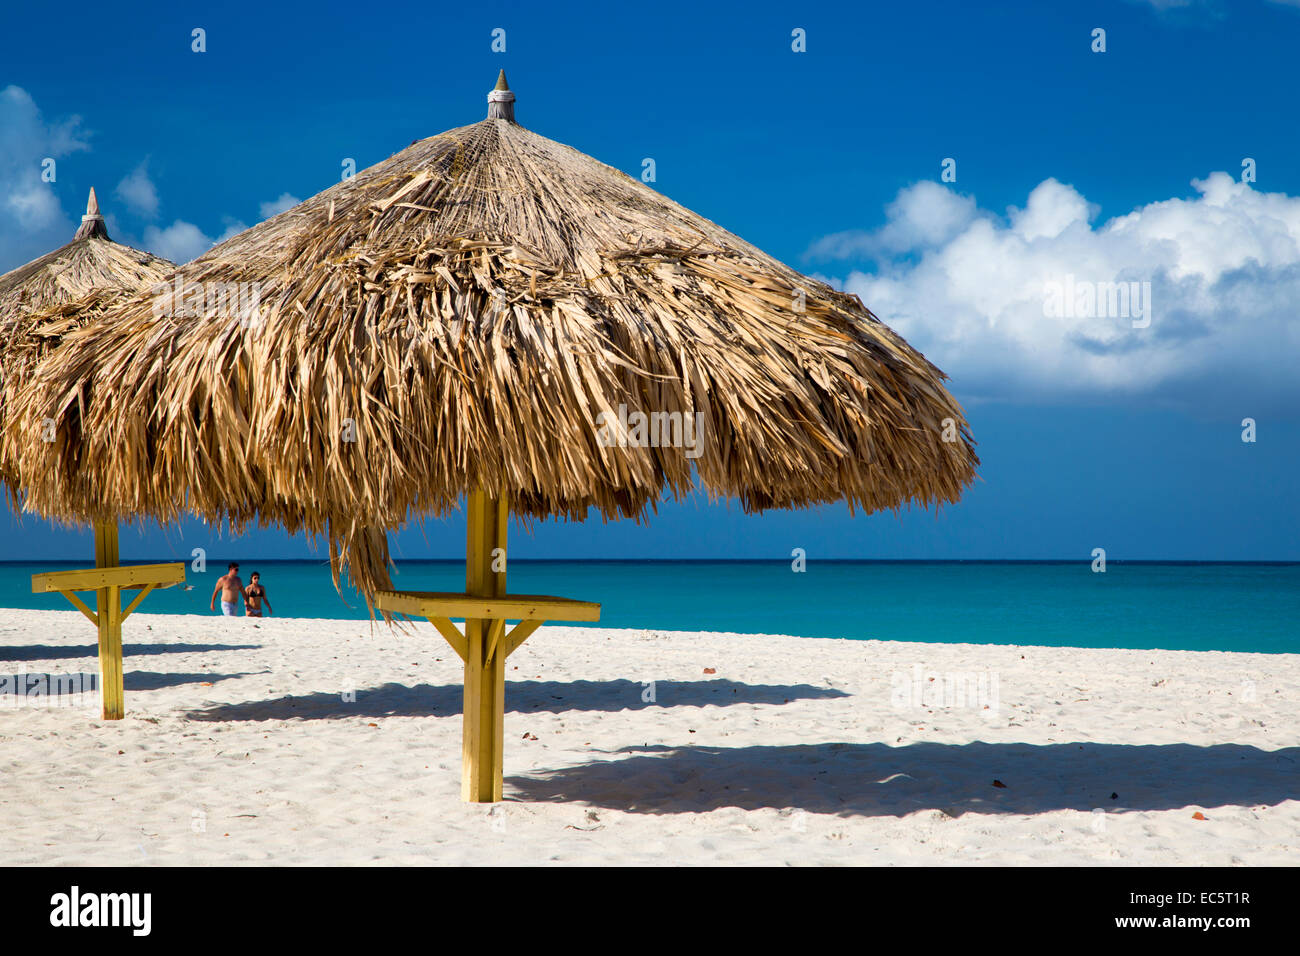 Aruba beach grass umbrella hi-res stock photography and images - Alamy